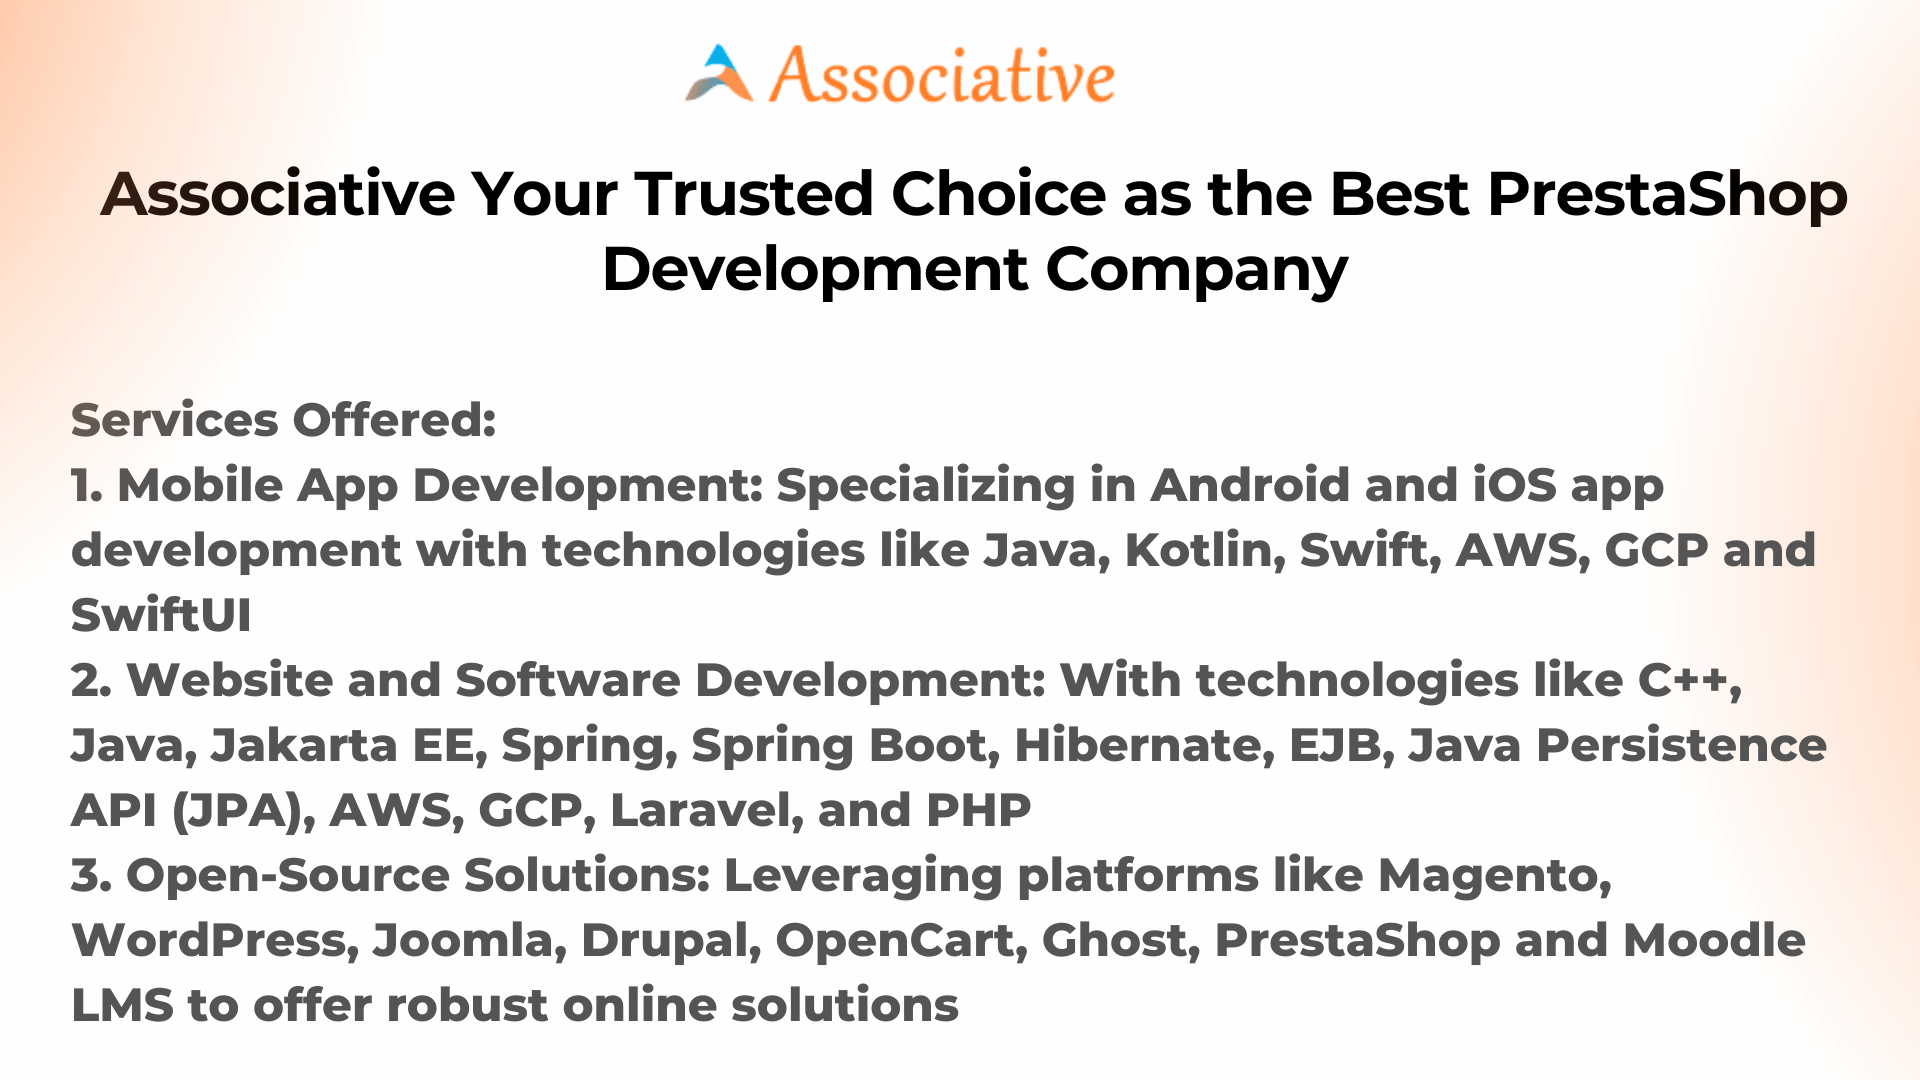 Associative Your Trusted Choice as the Best PrestaShop Development Company